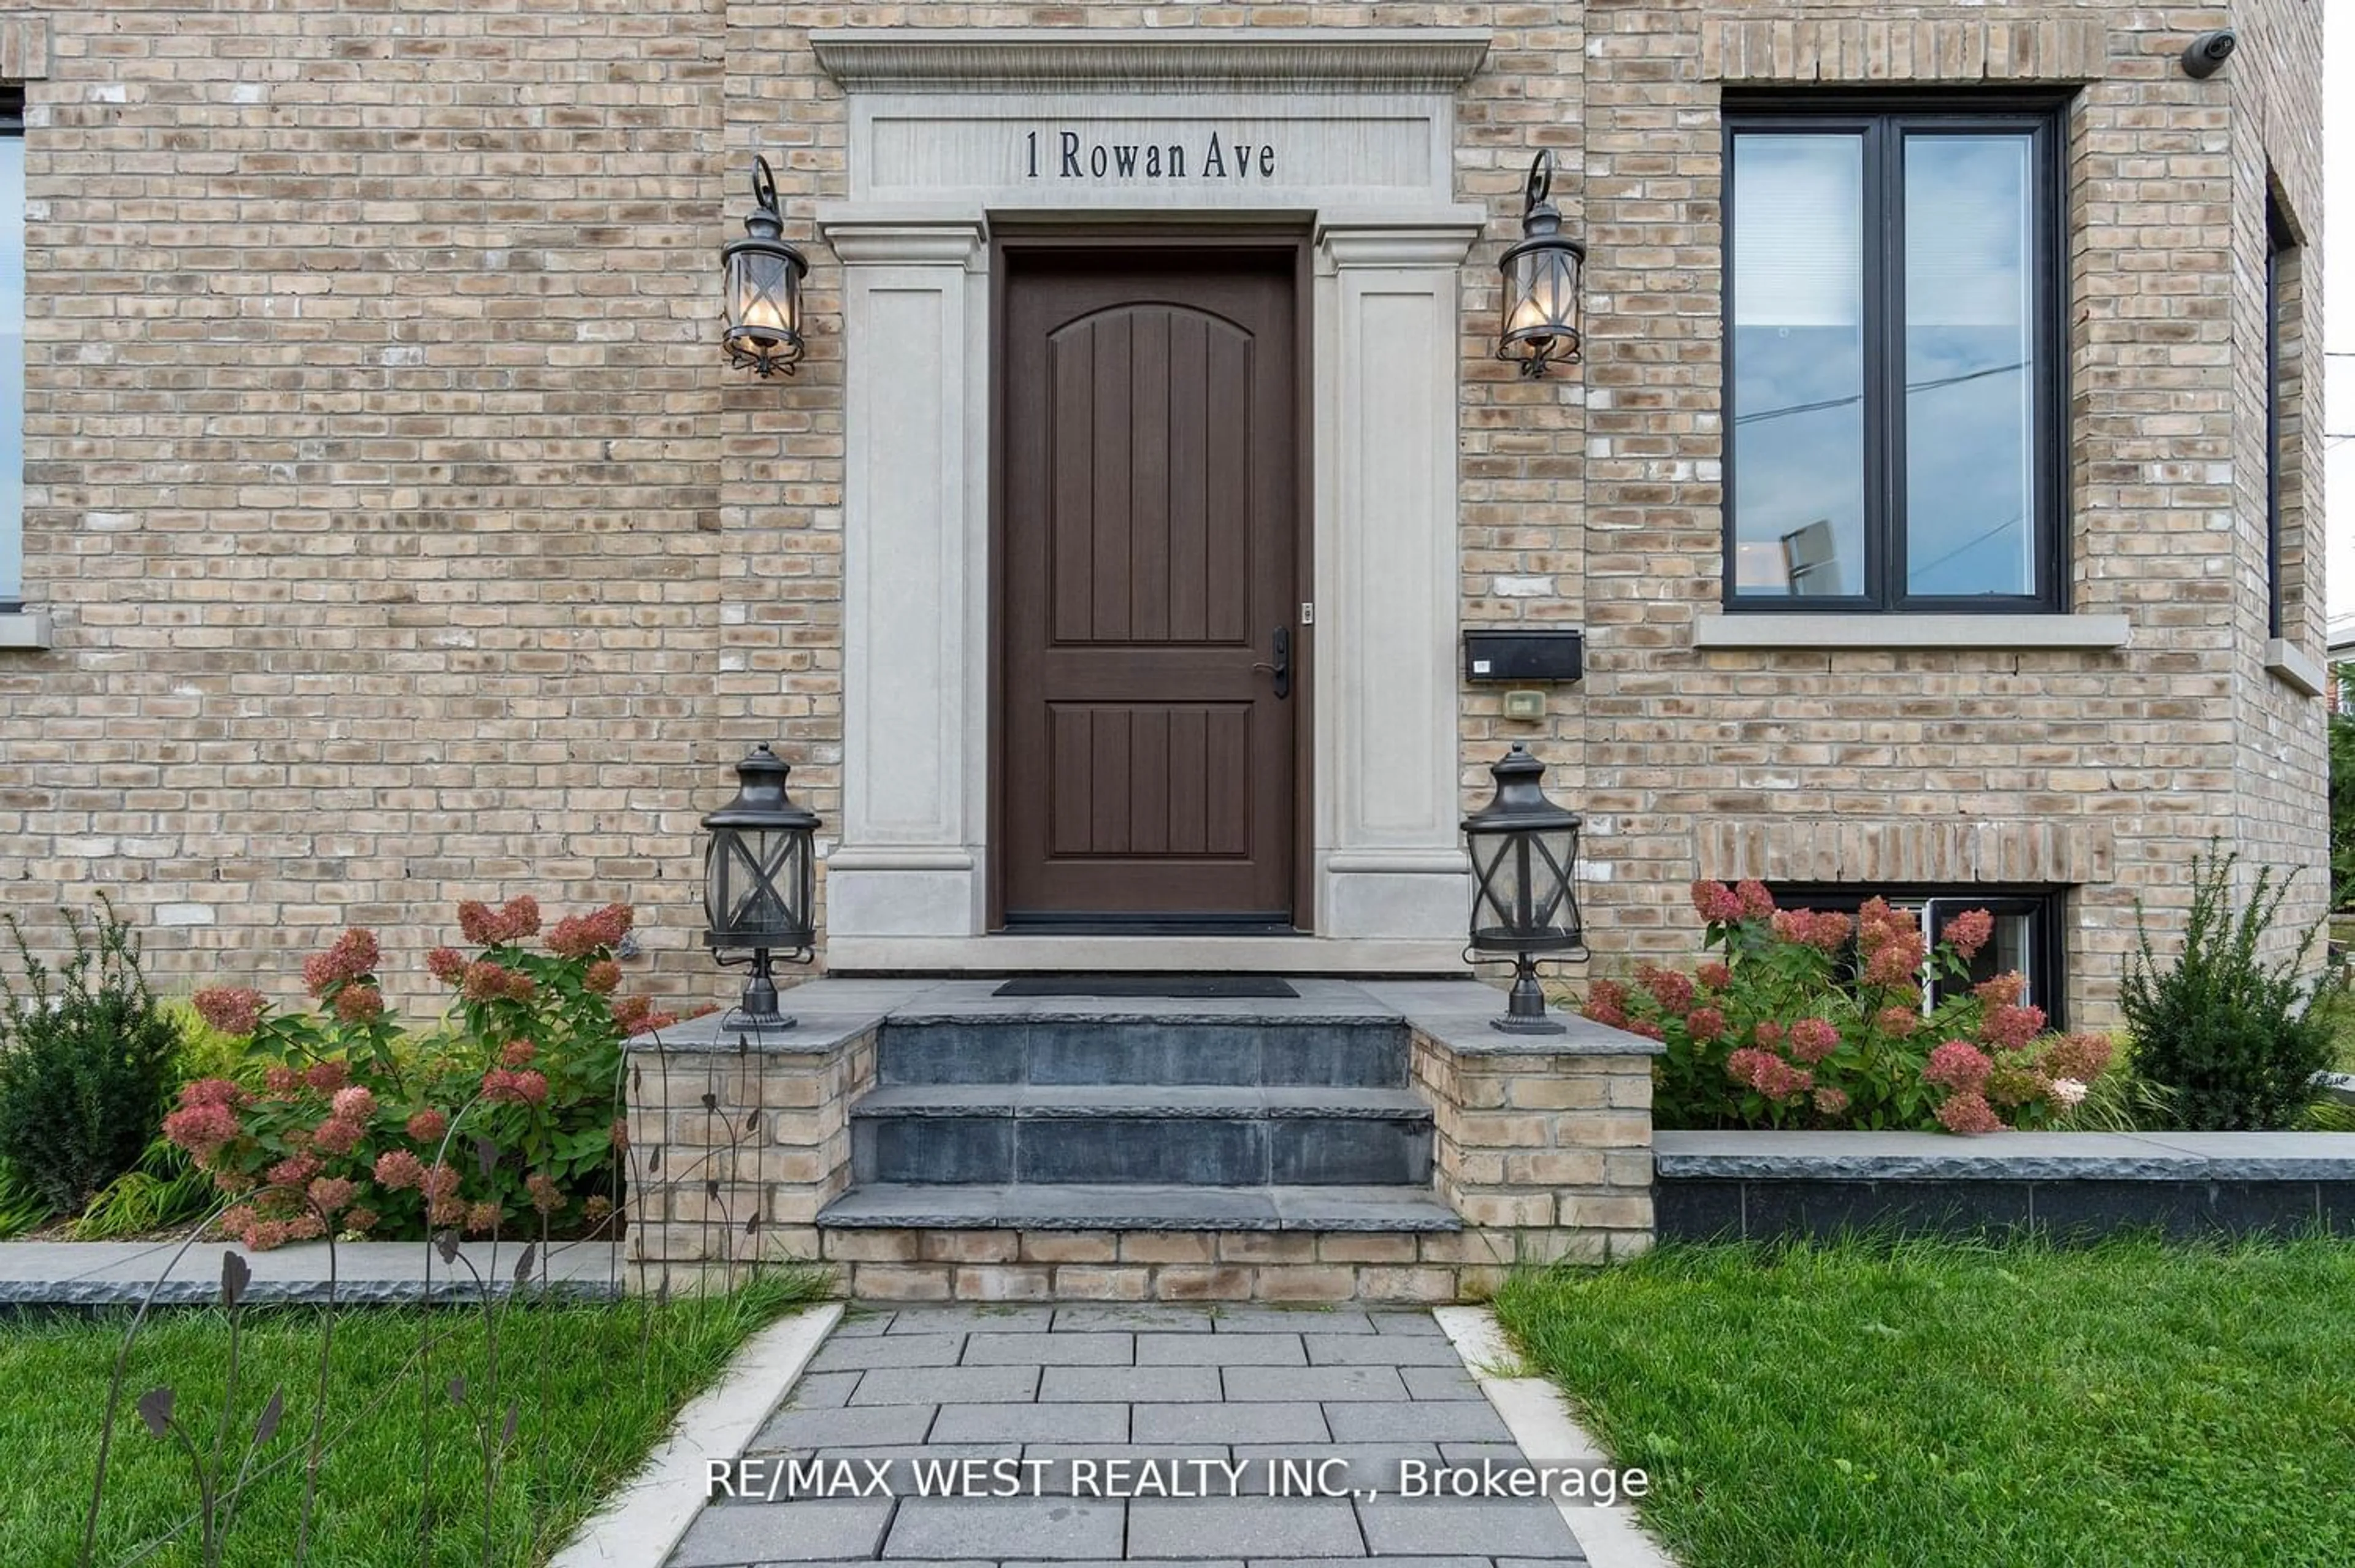 Home with stone exterior material for 1 Rowan Ave, Toronto Ontario M6E 0A5